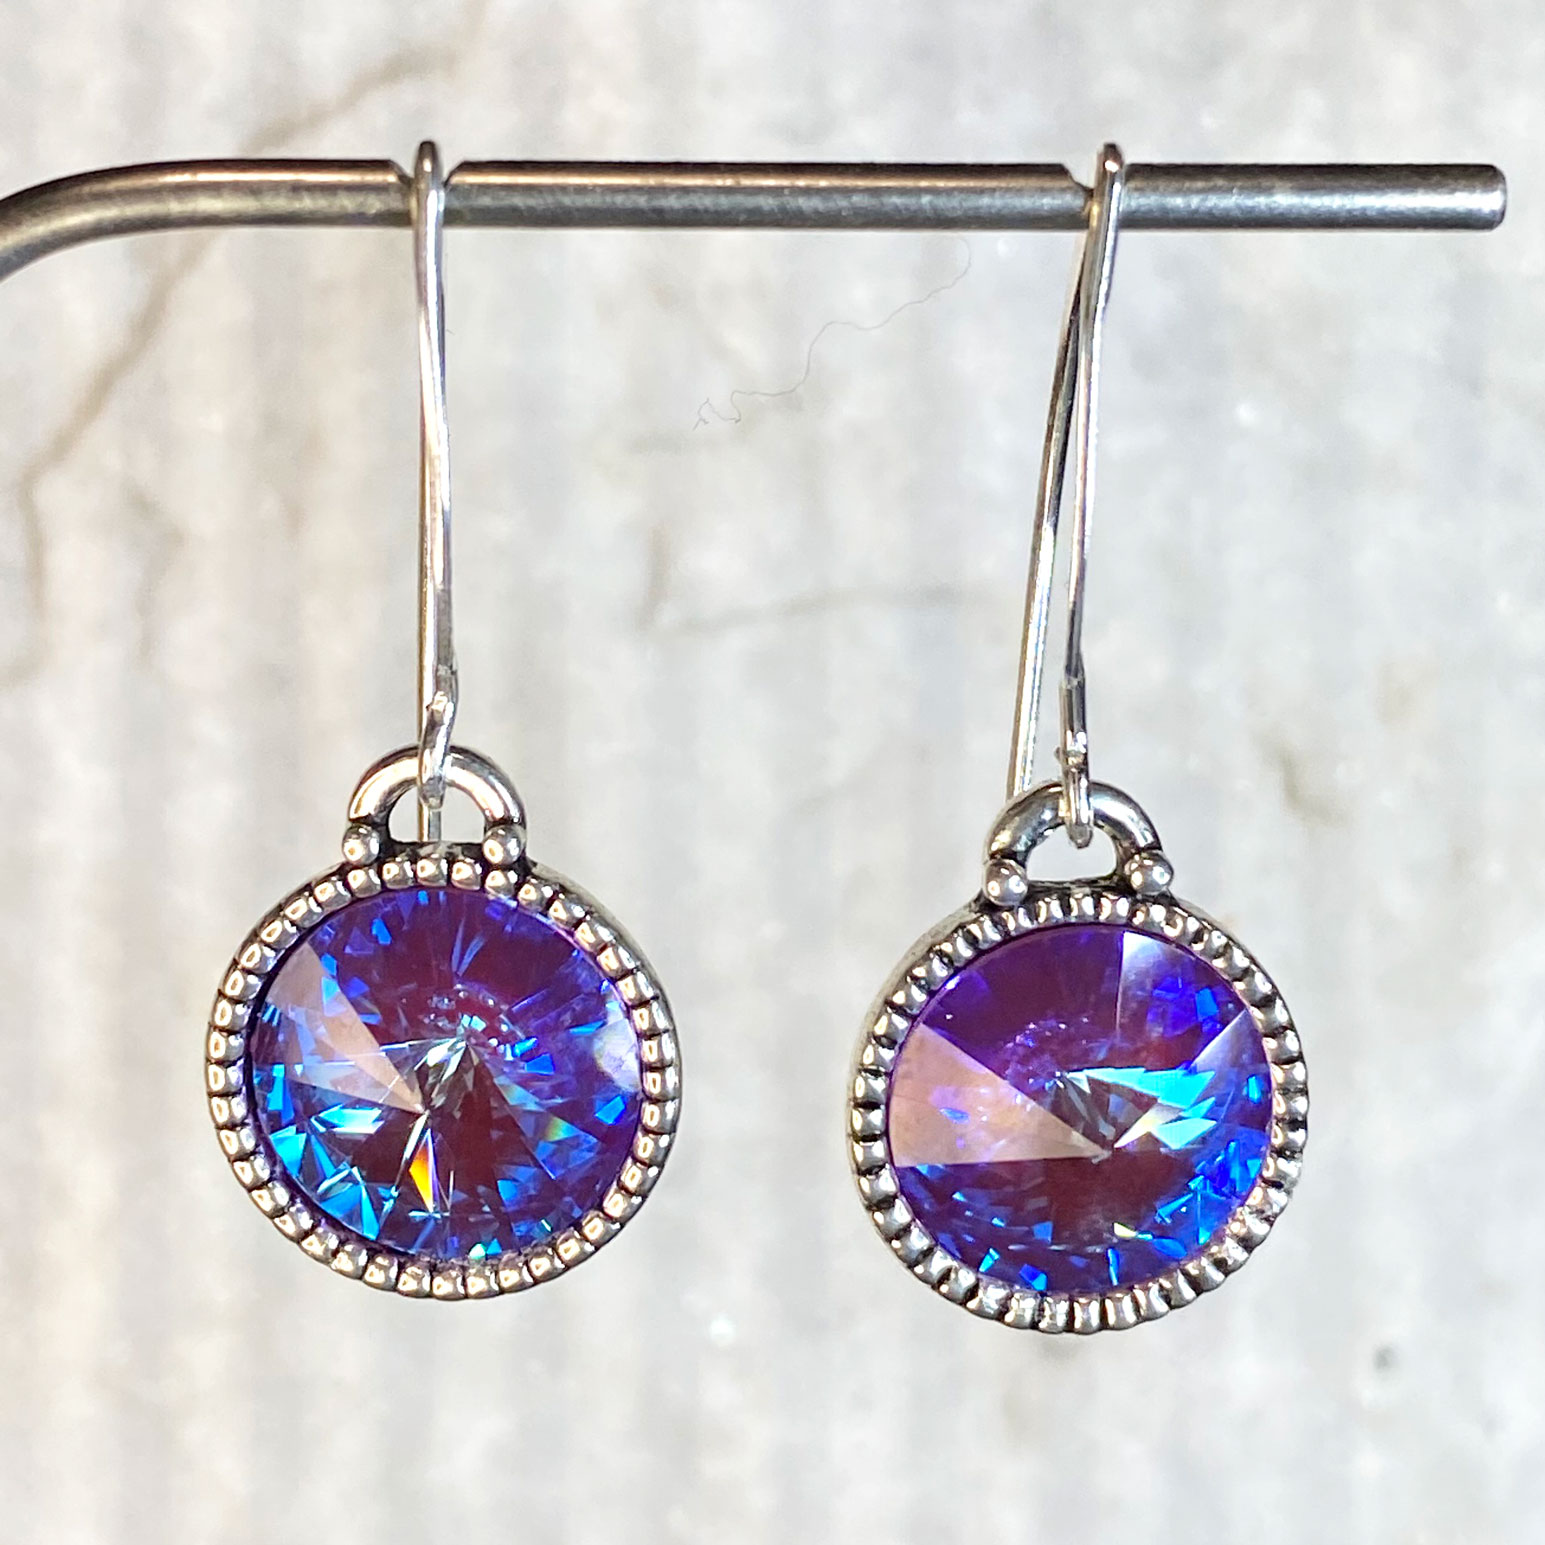 Handmade Earrings with Swarovski Crystals Earrings with Swarovski Crystals